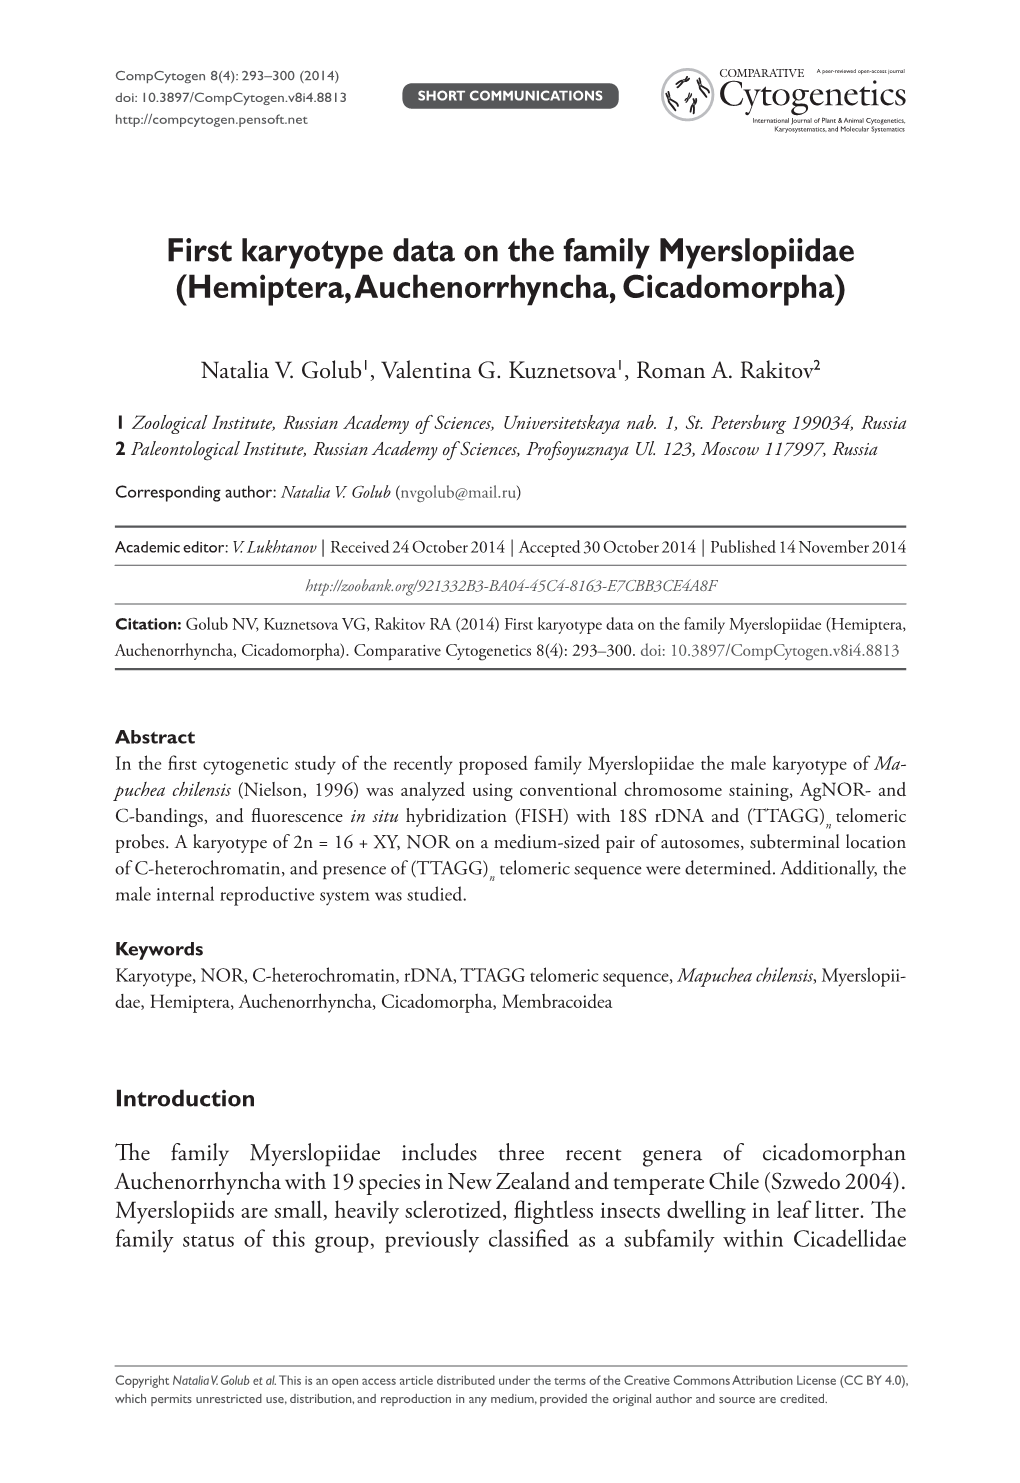 First Karyotype Data on the Family Myerslopiidae